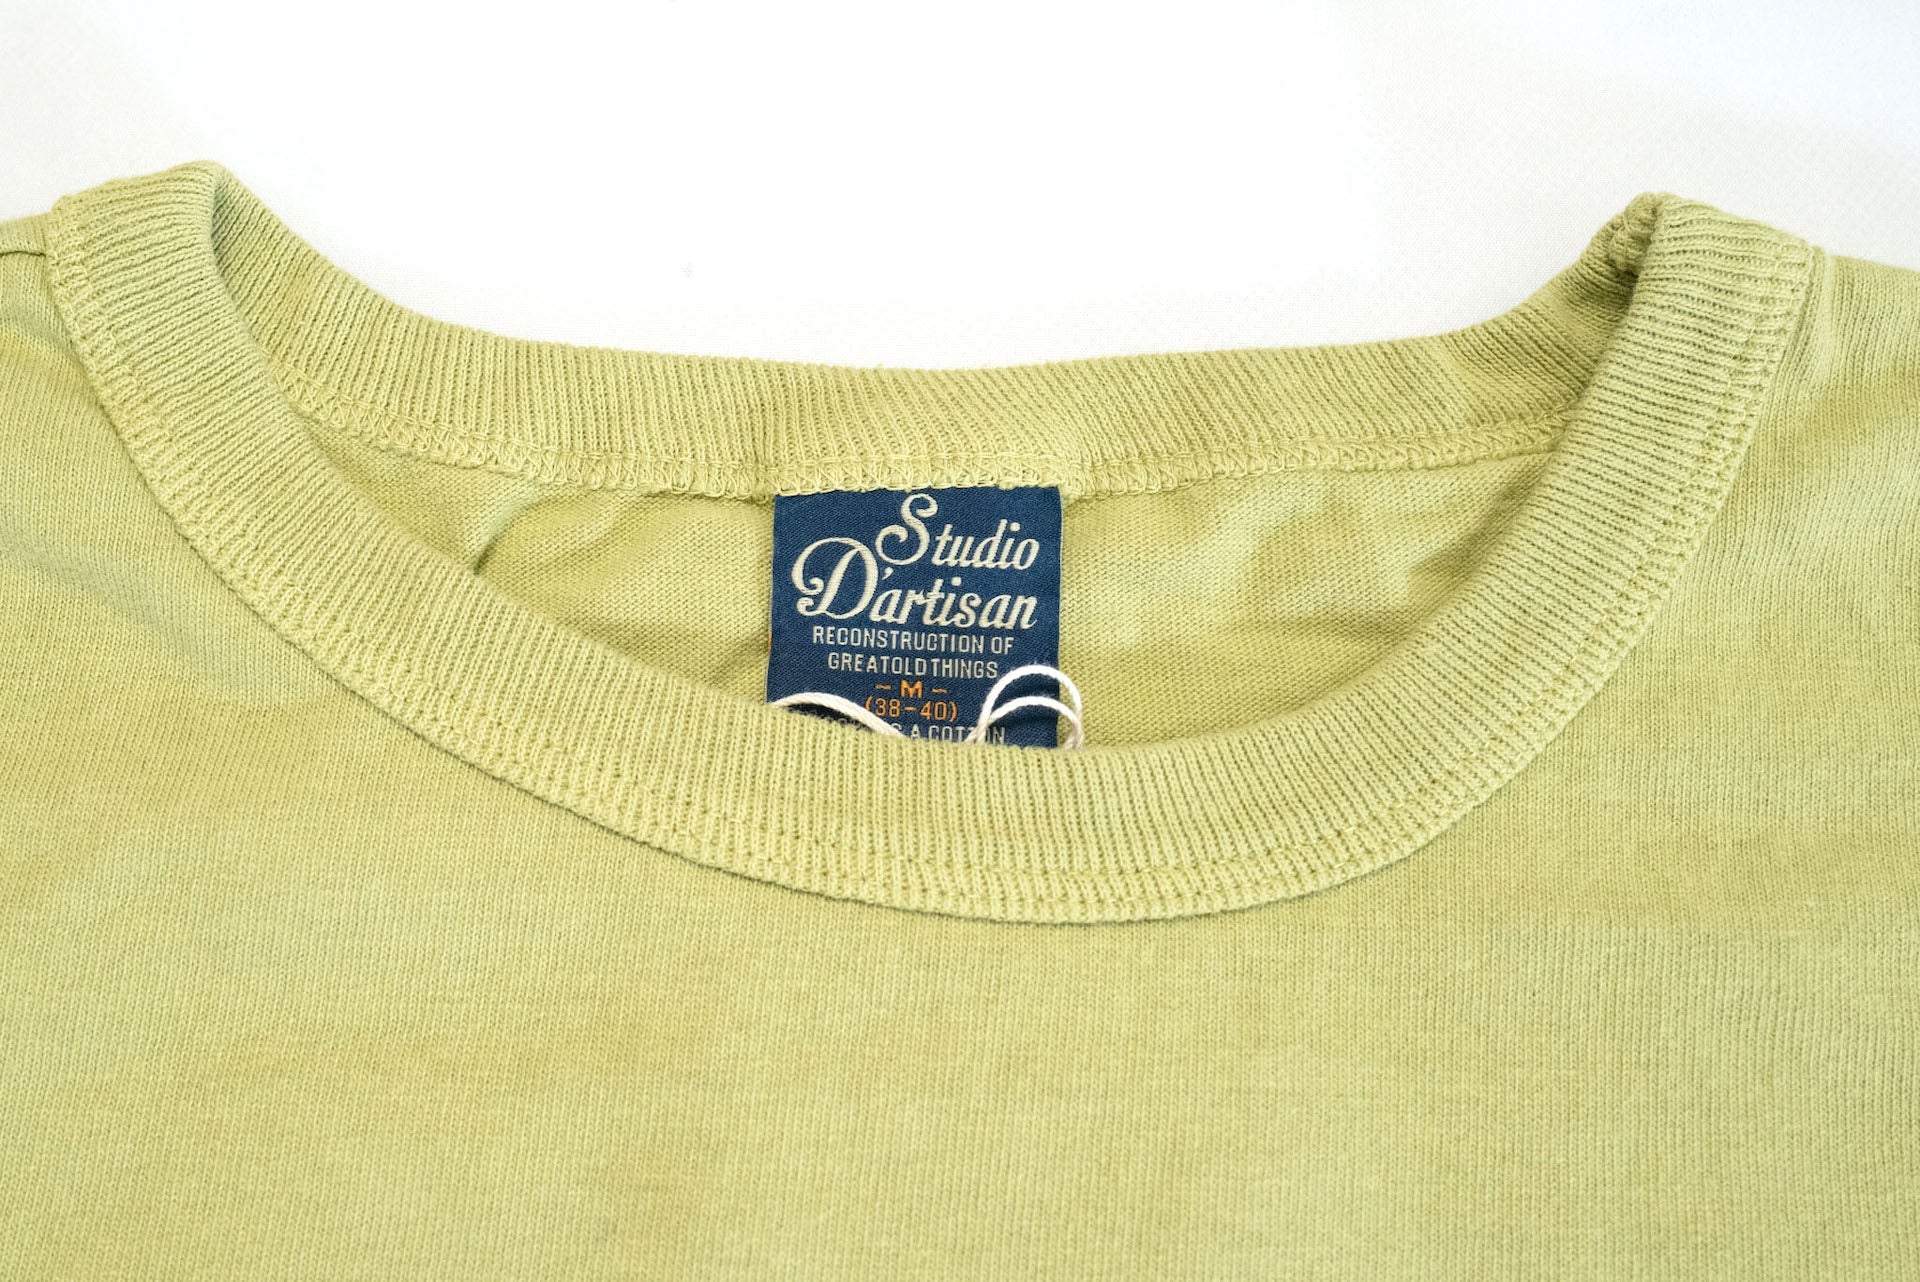 Studio D'Artisan 7oz 'USA Cotton' Loopwheeled Tee (Lime Green)